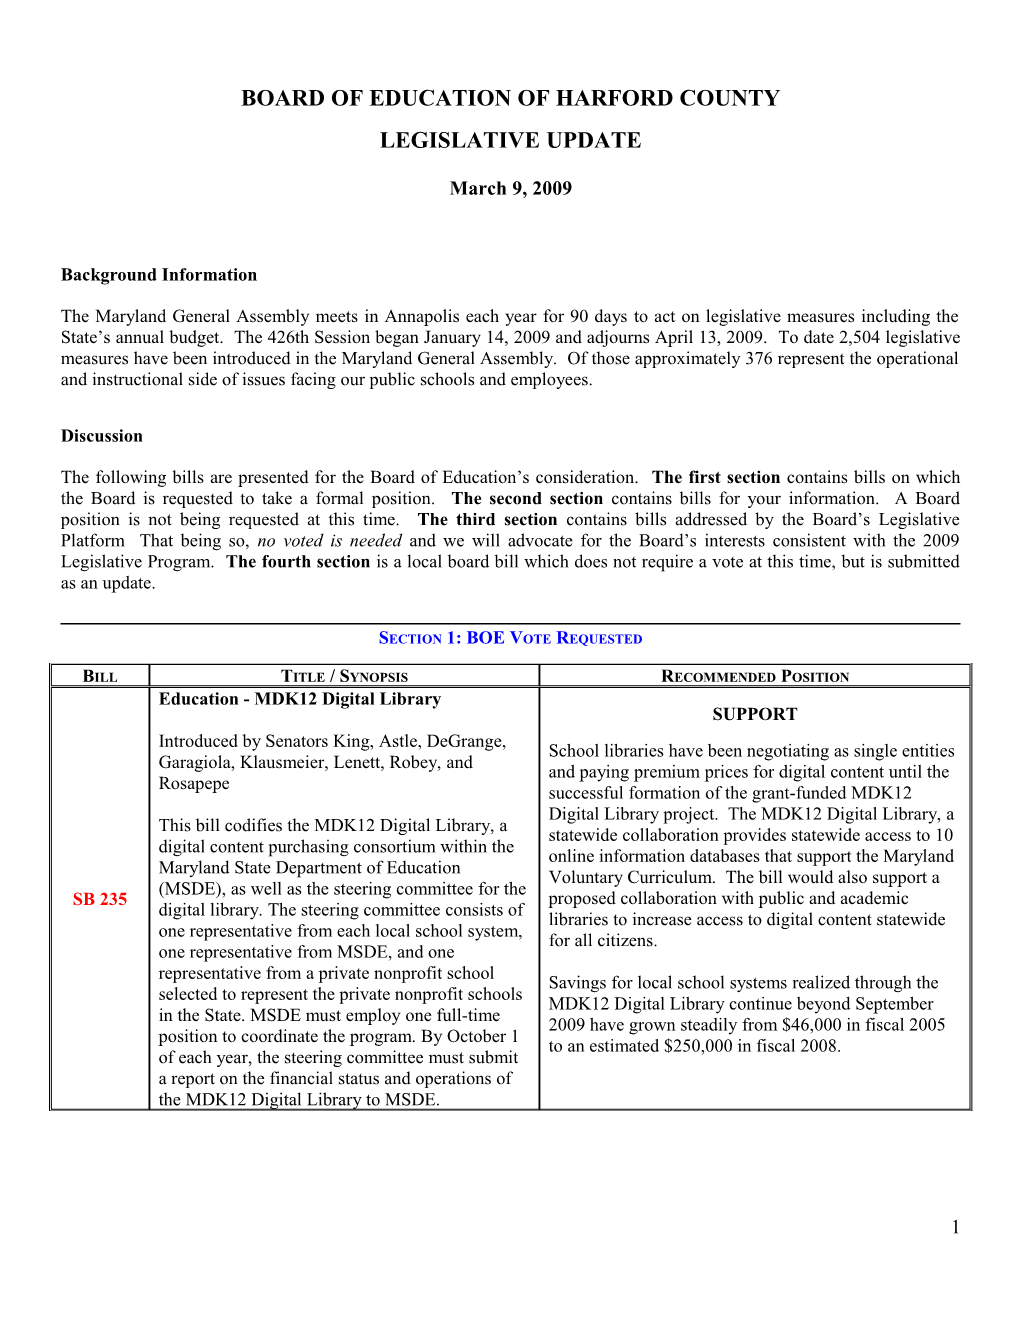 BOE Legis Info Report 3 9 2009